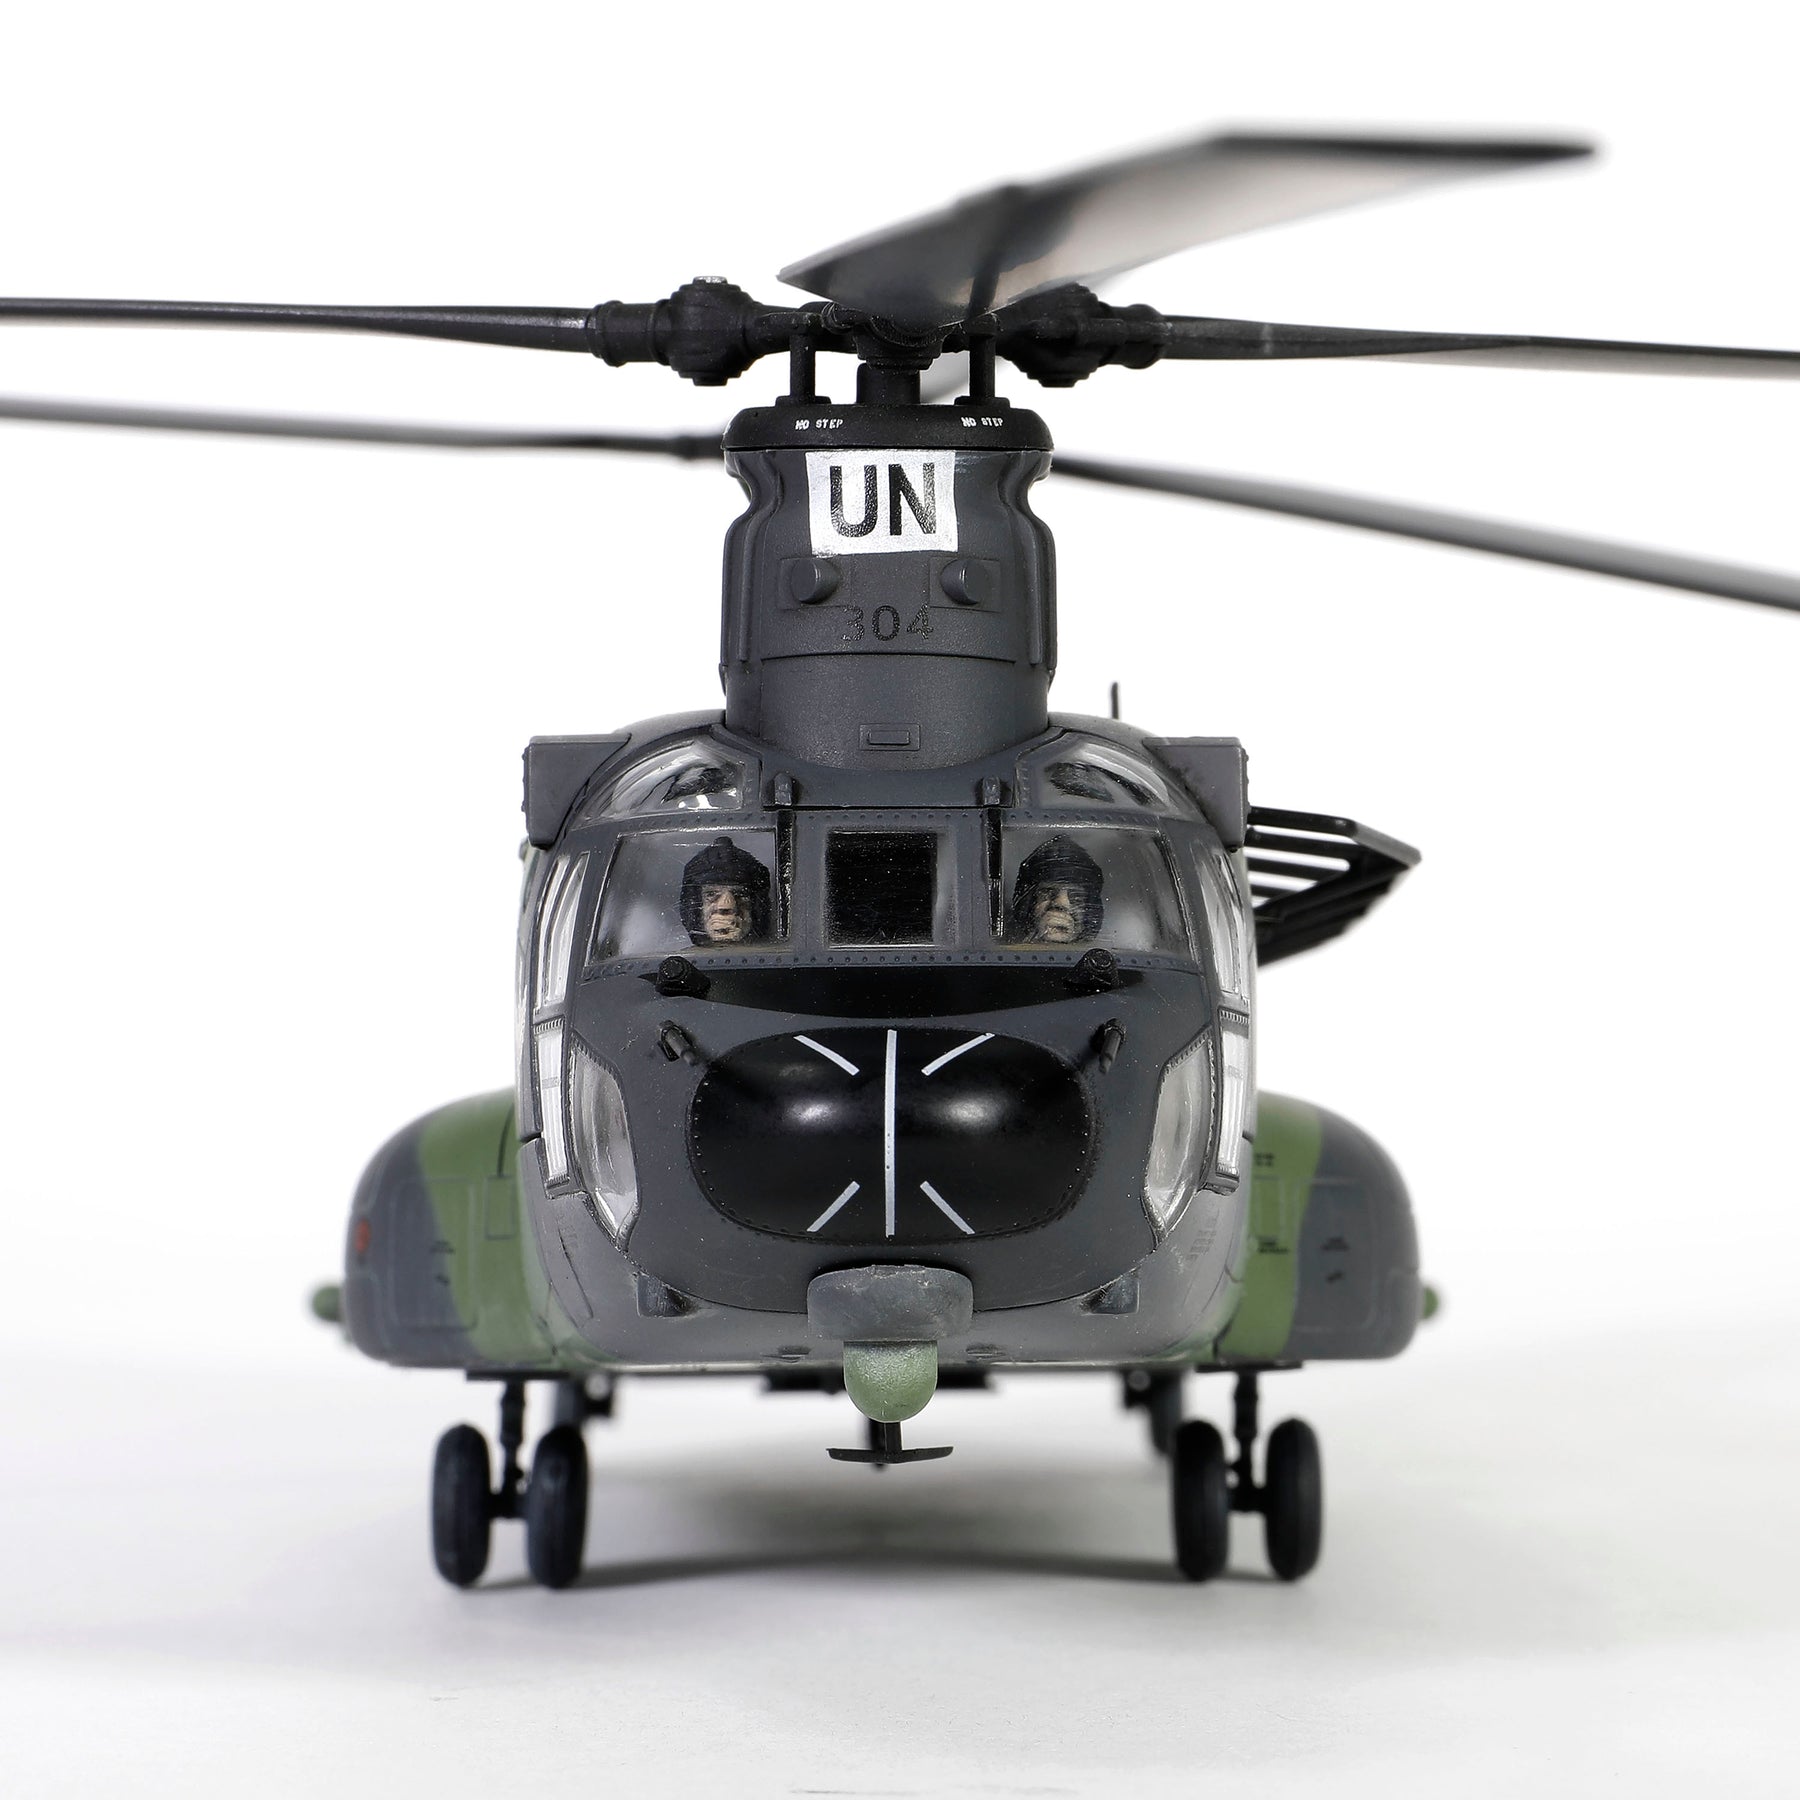 CH-147F（CH-47C） カナダ空軍 第1航空団 第450戦術ヘリコプター飛行隊 国連PKO（MINUSMA）仕様 カストール基地・ガオ（マリ共和国） 2018年-2019年 #147304 1/72 [55706]